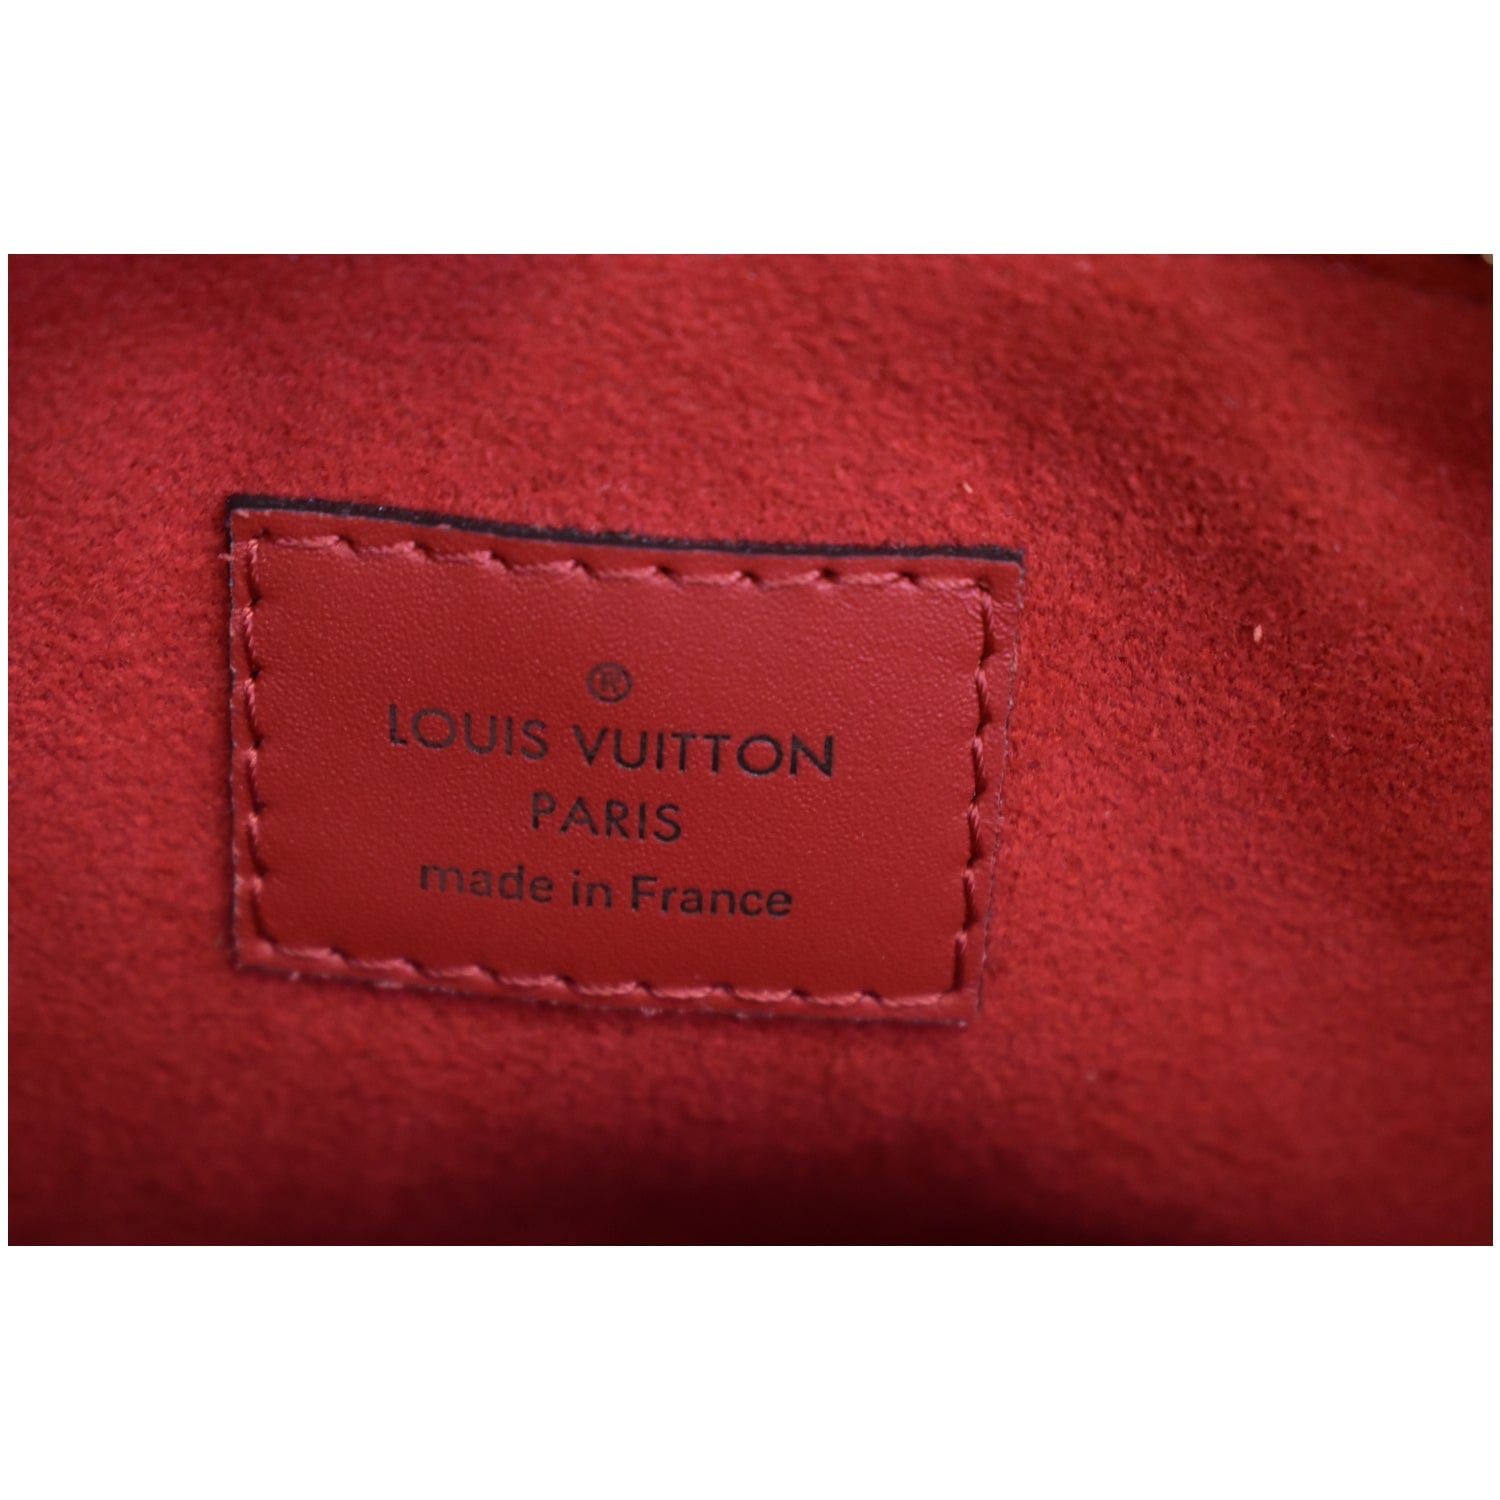 Sold Louis Vuitton Monogram Soufflot BB 2021